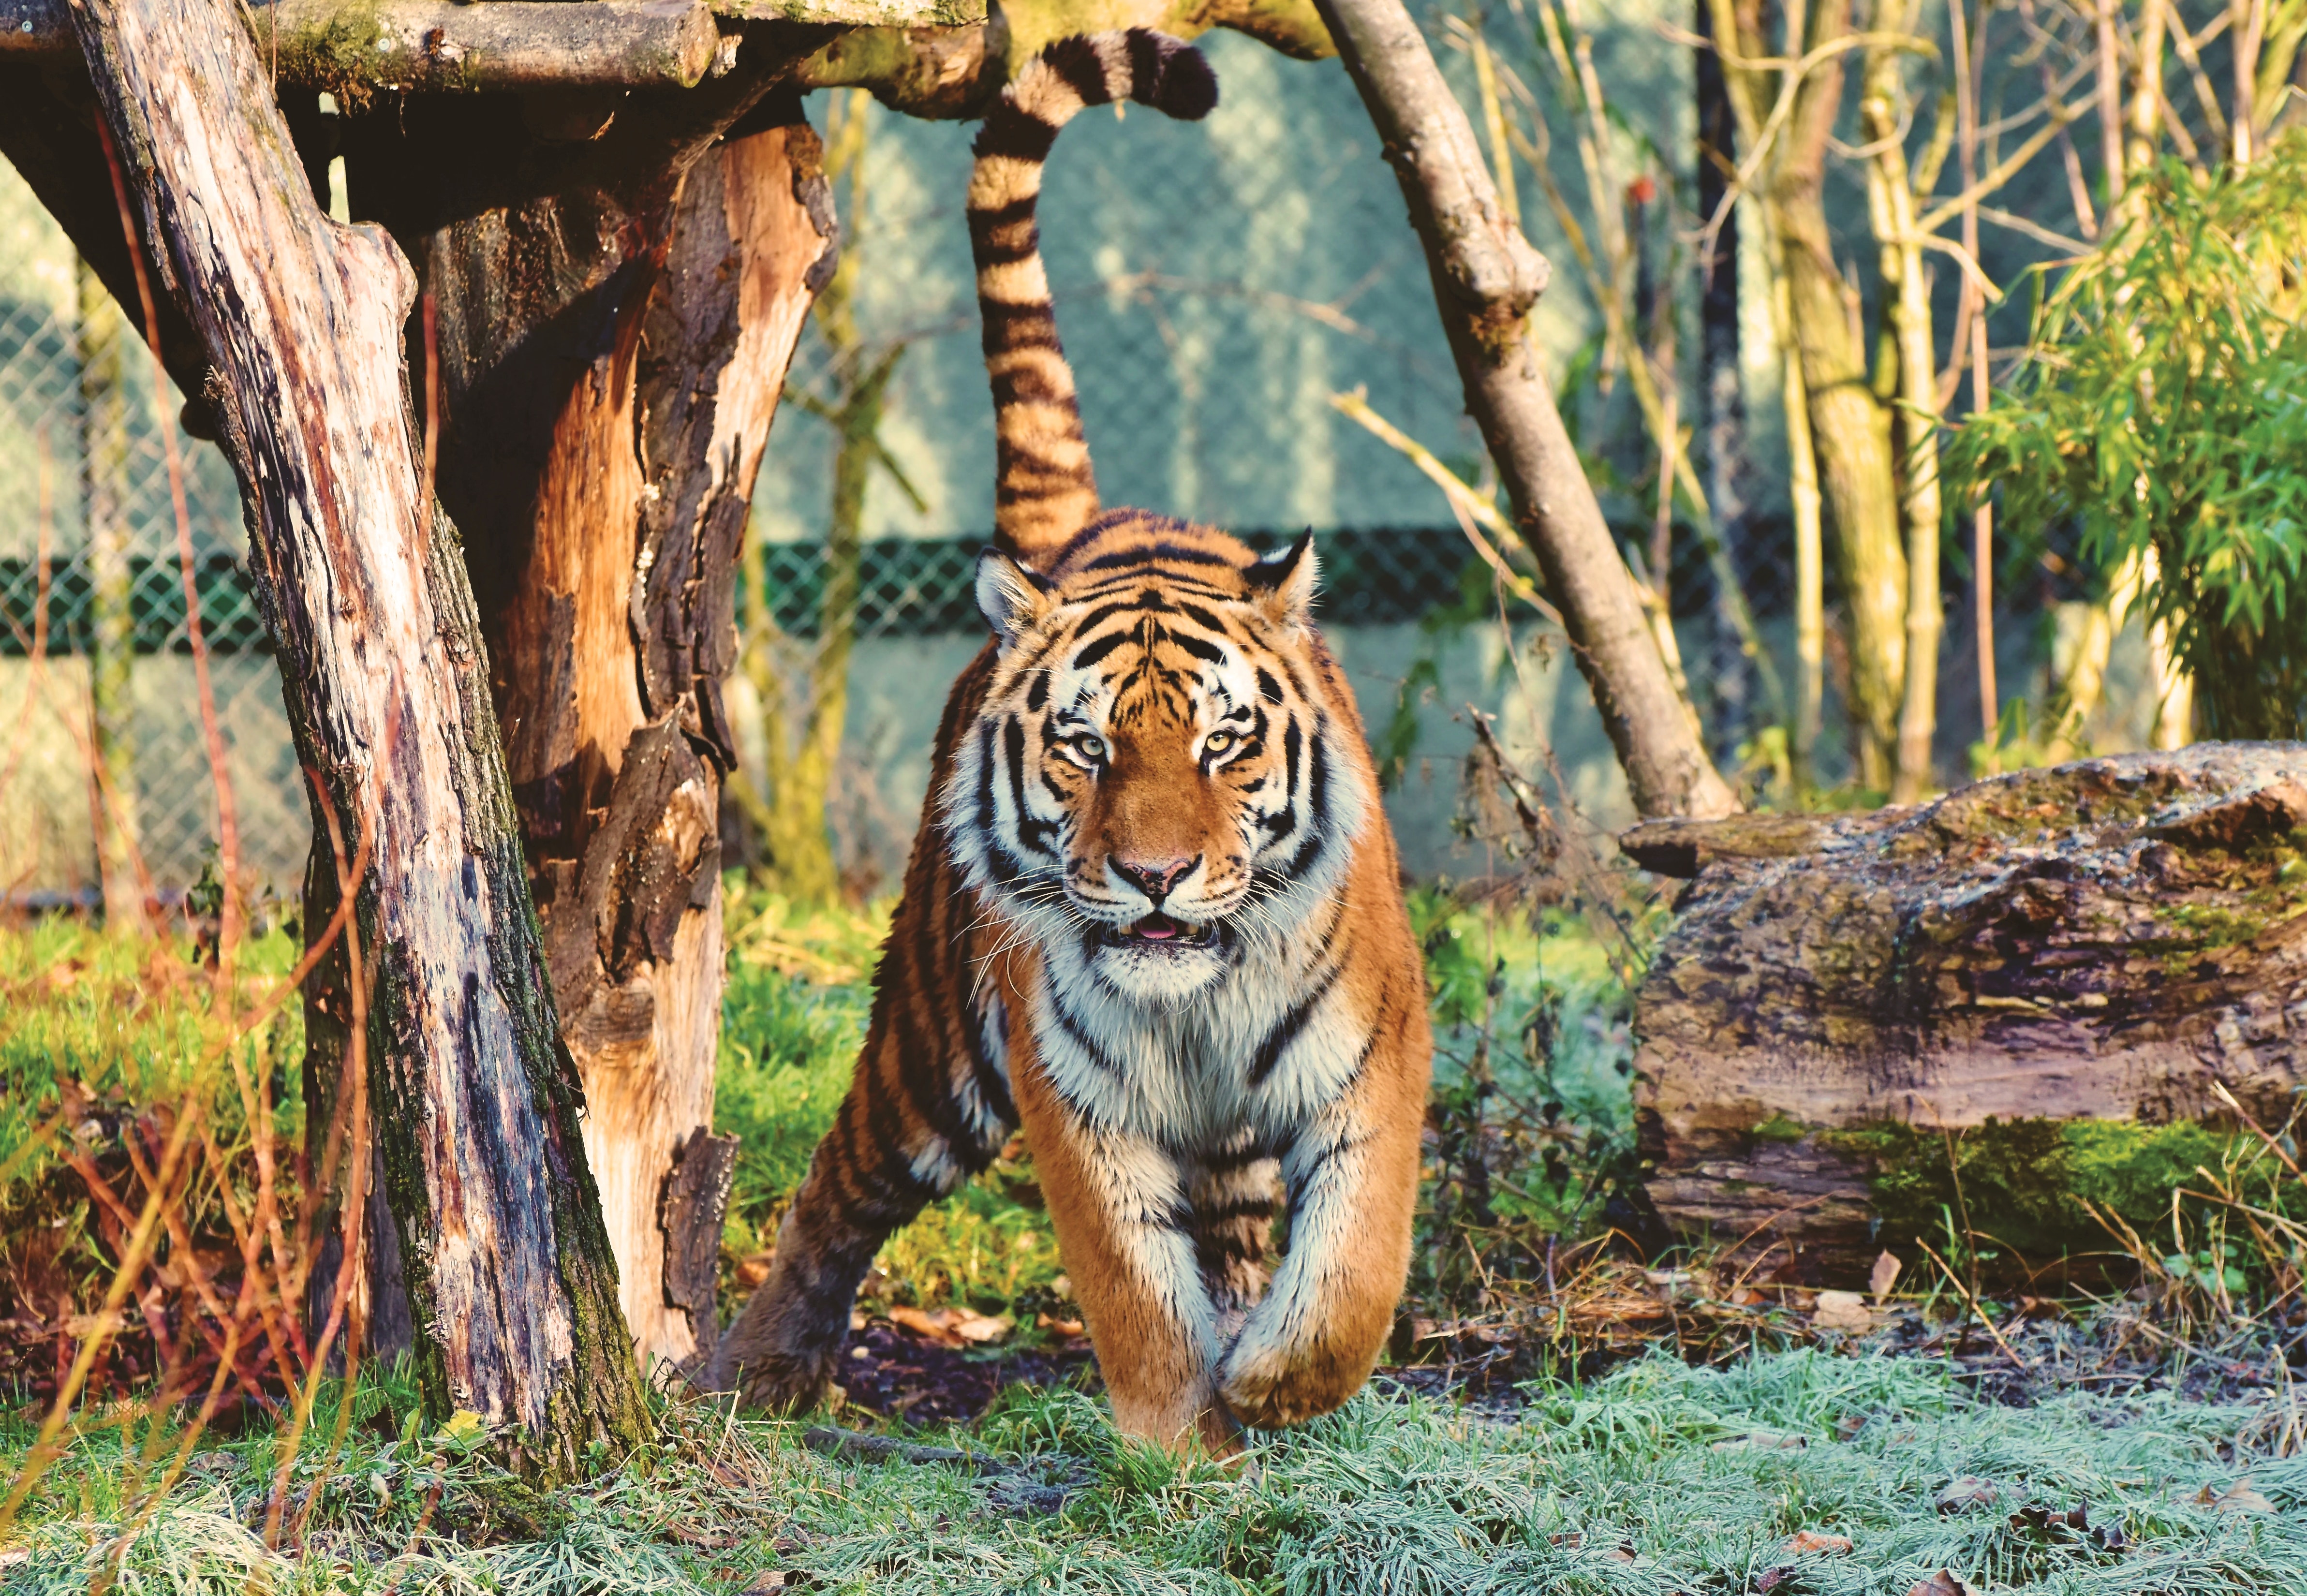 Best Tiger Image · 100% Free Downloads